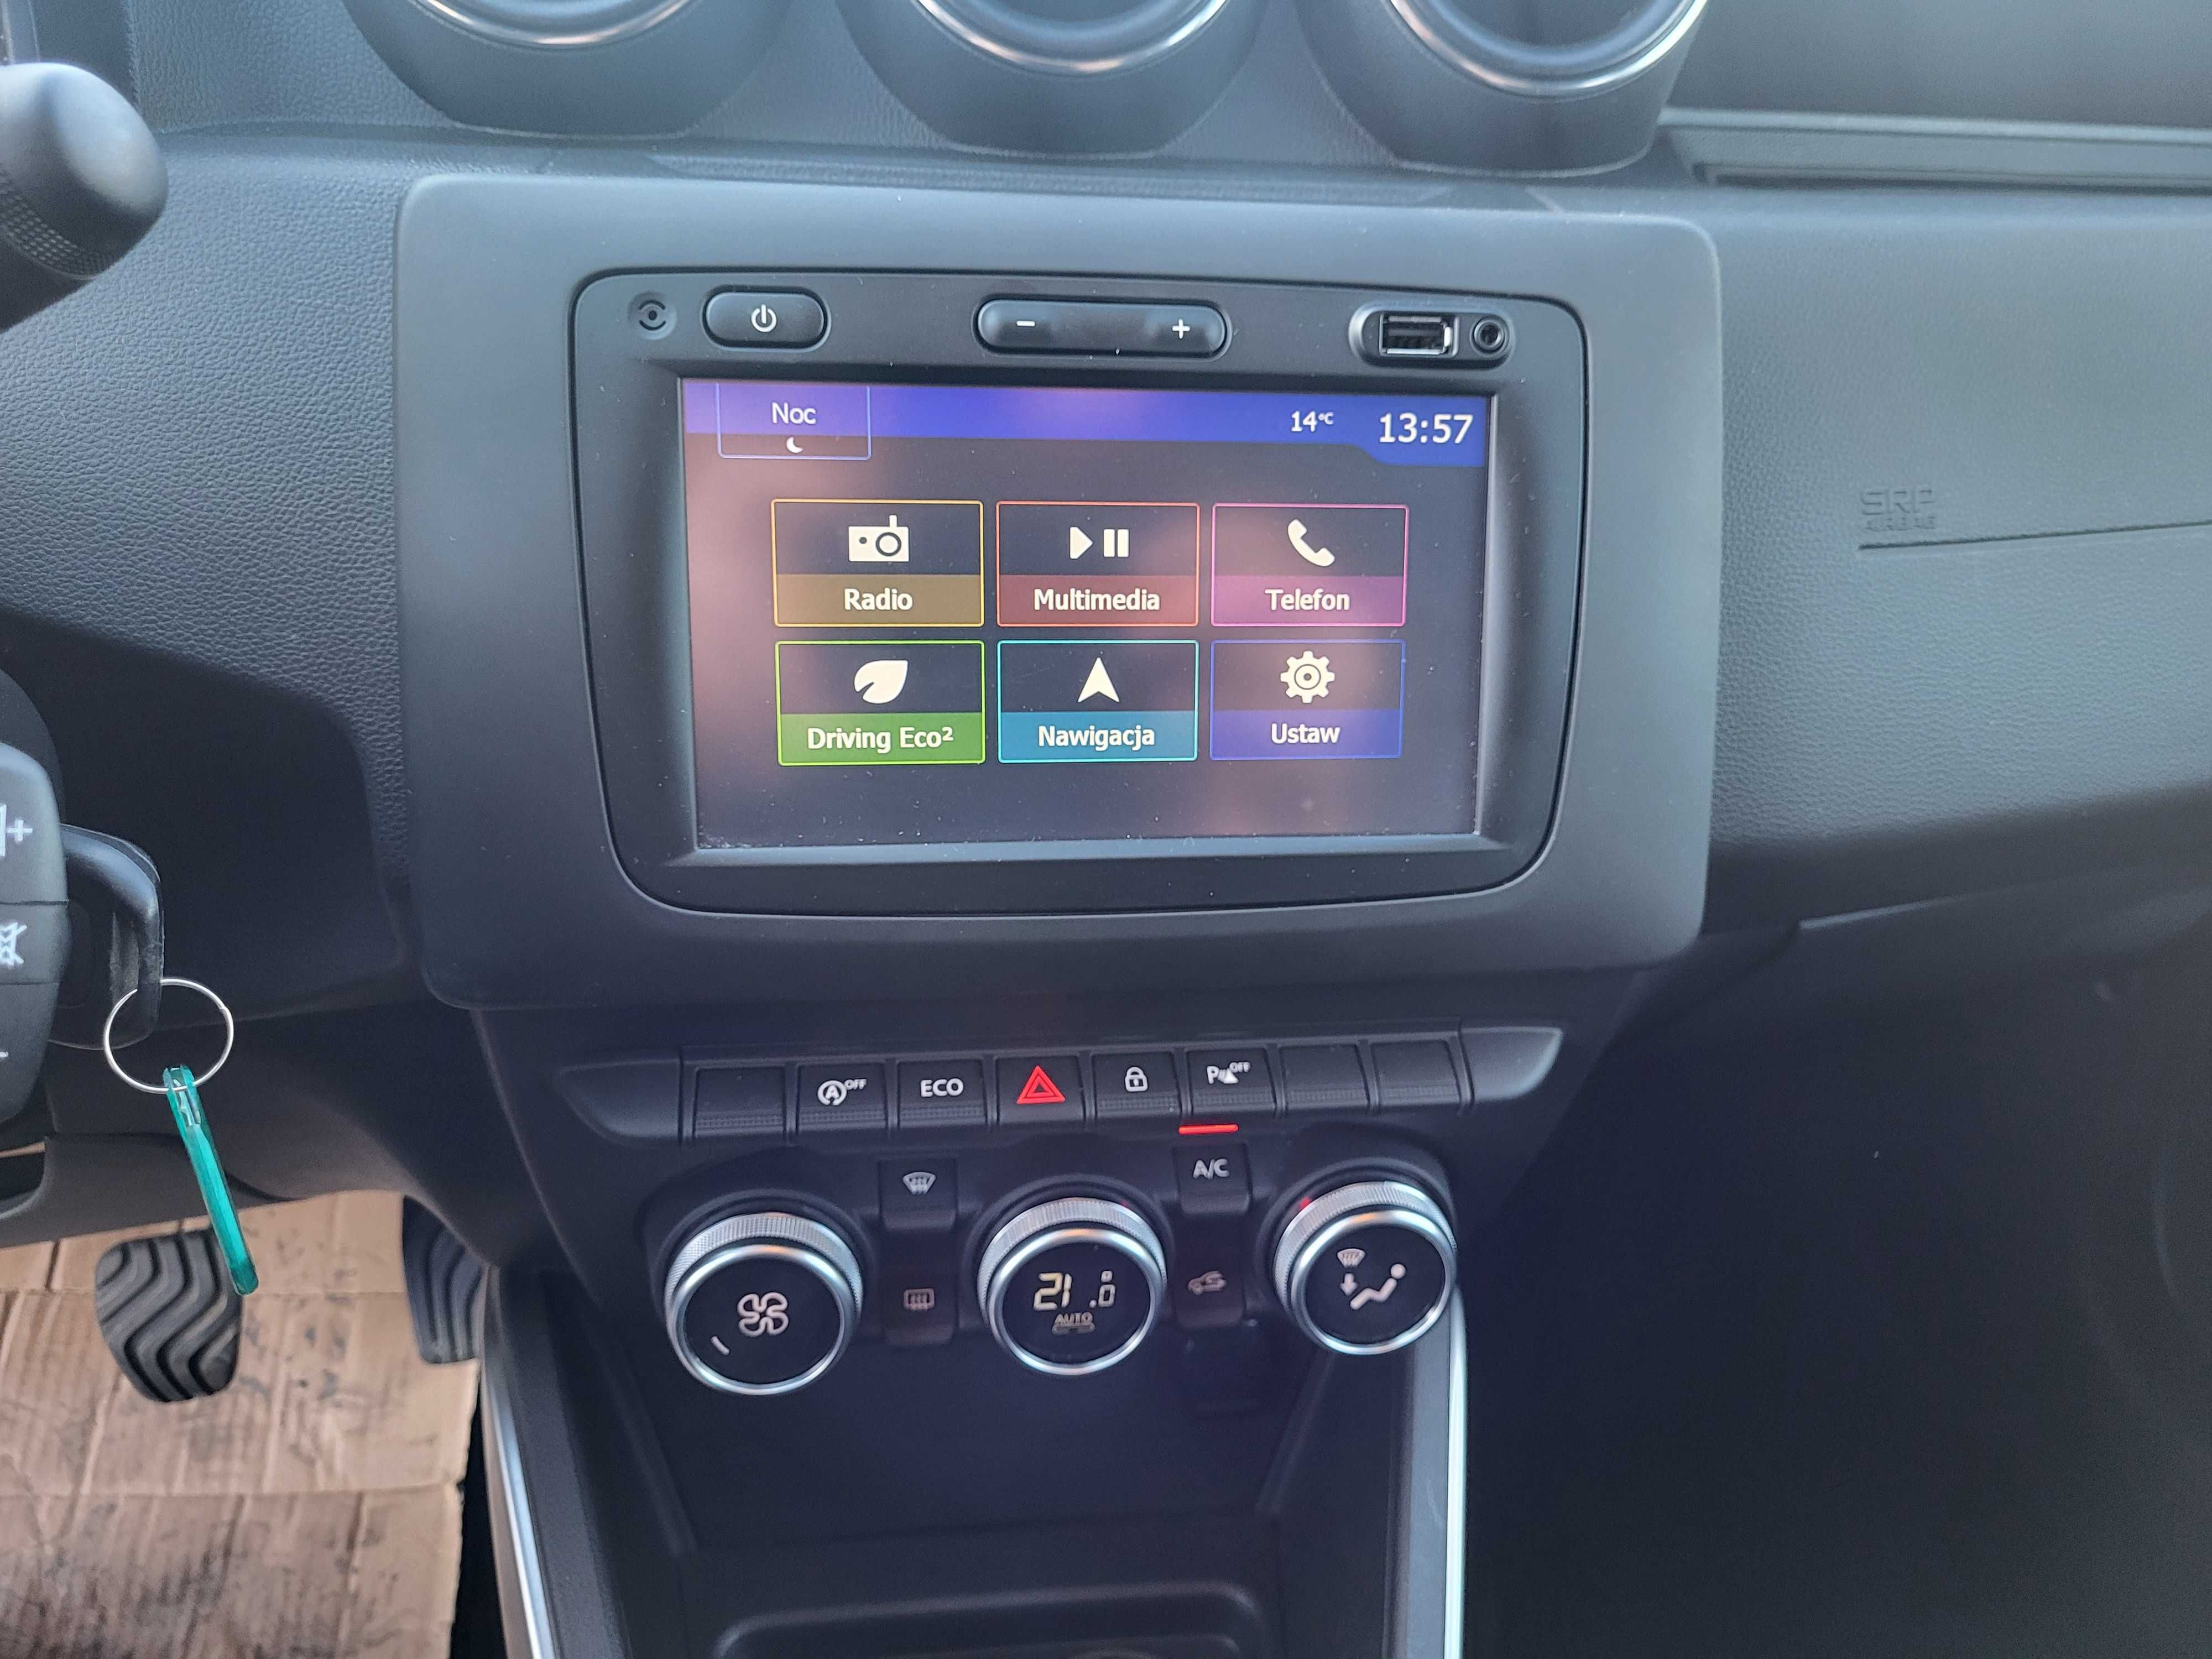 Dacia Duster PRESTIGE 1,5dci 110PS 5/2018 NAVI CLIMATRONIC